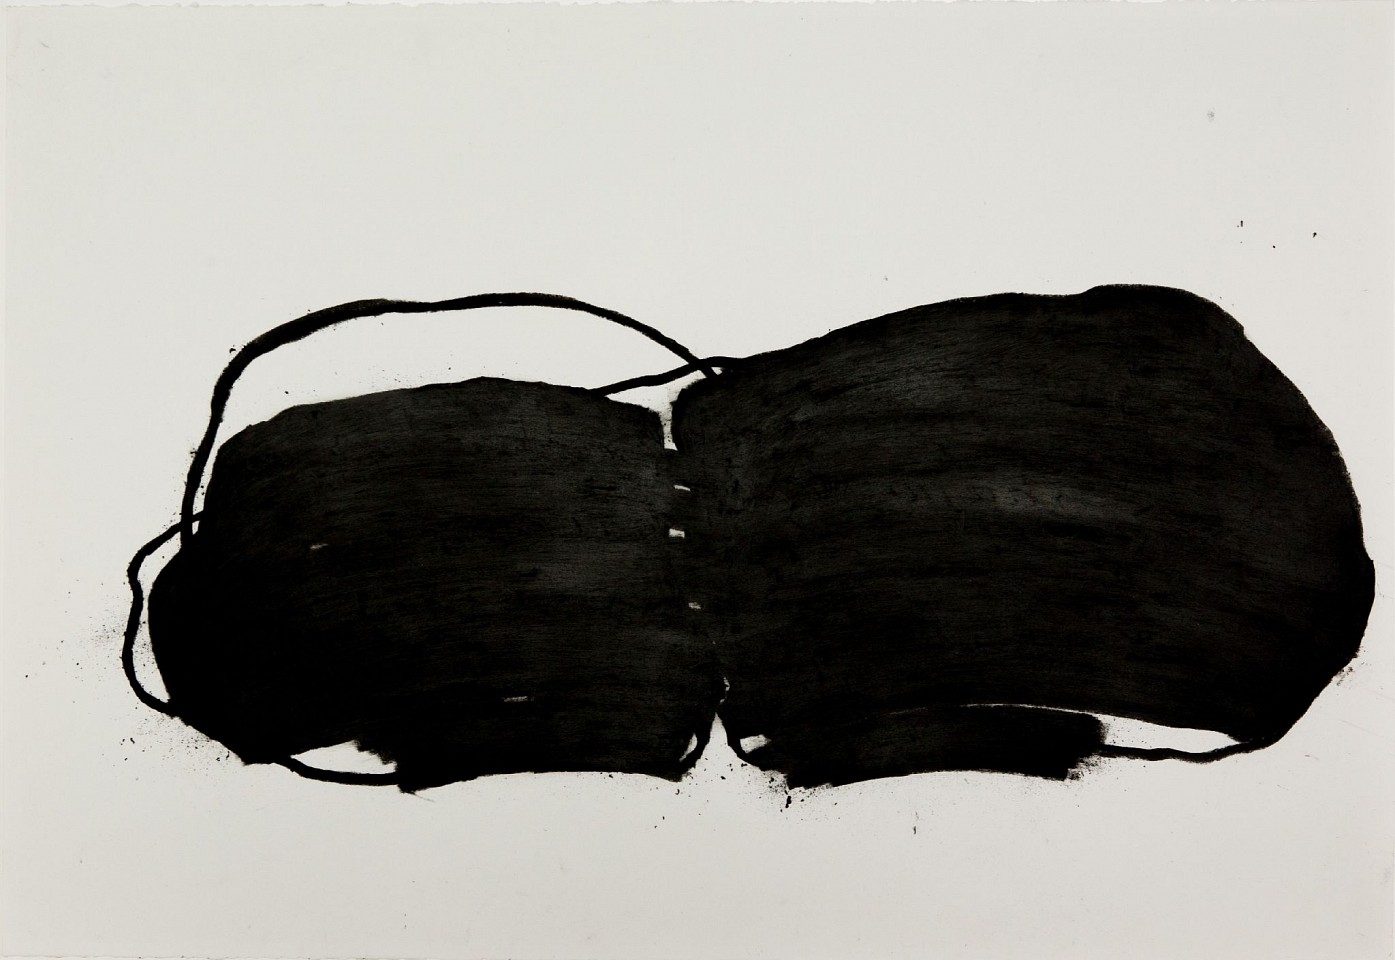 UDO NÖGER, Alles 20, 2019
charcoal on paper, 33 x 47 in. (83.8 x 119.4 cm)
NU-C-0200